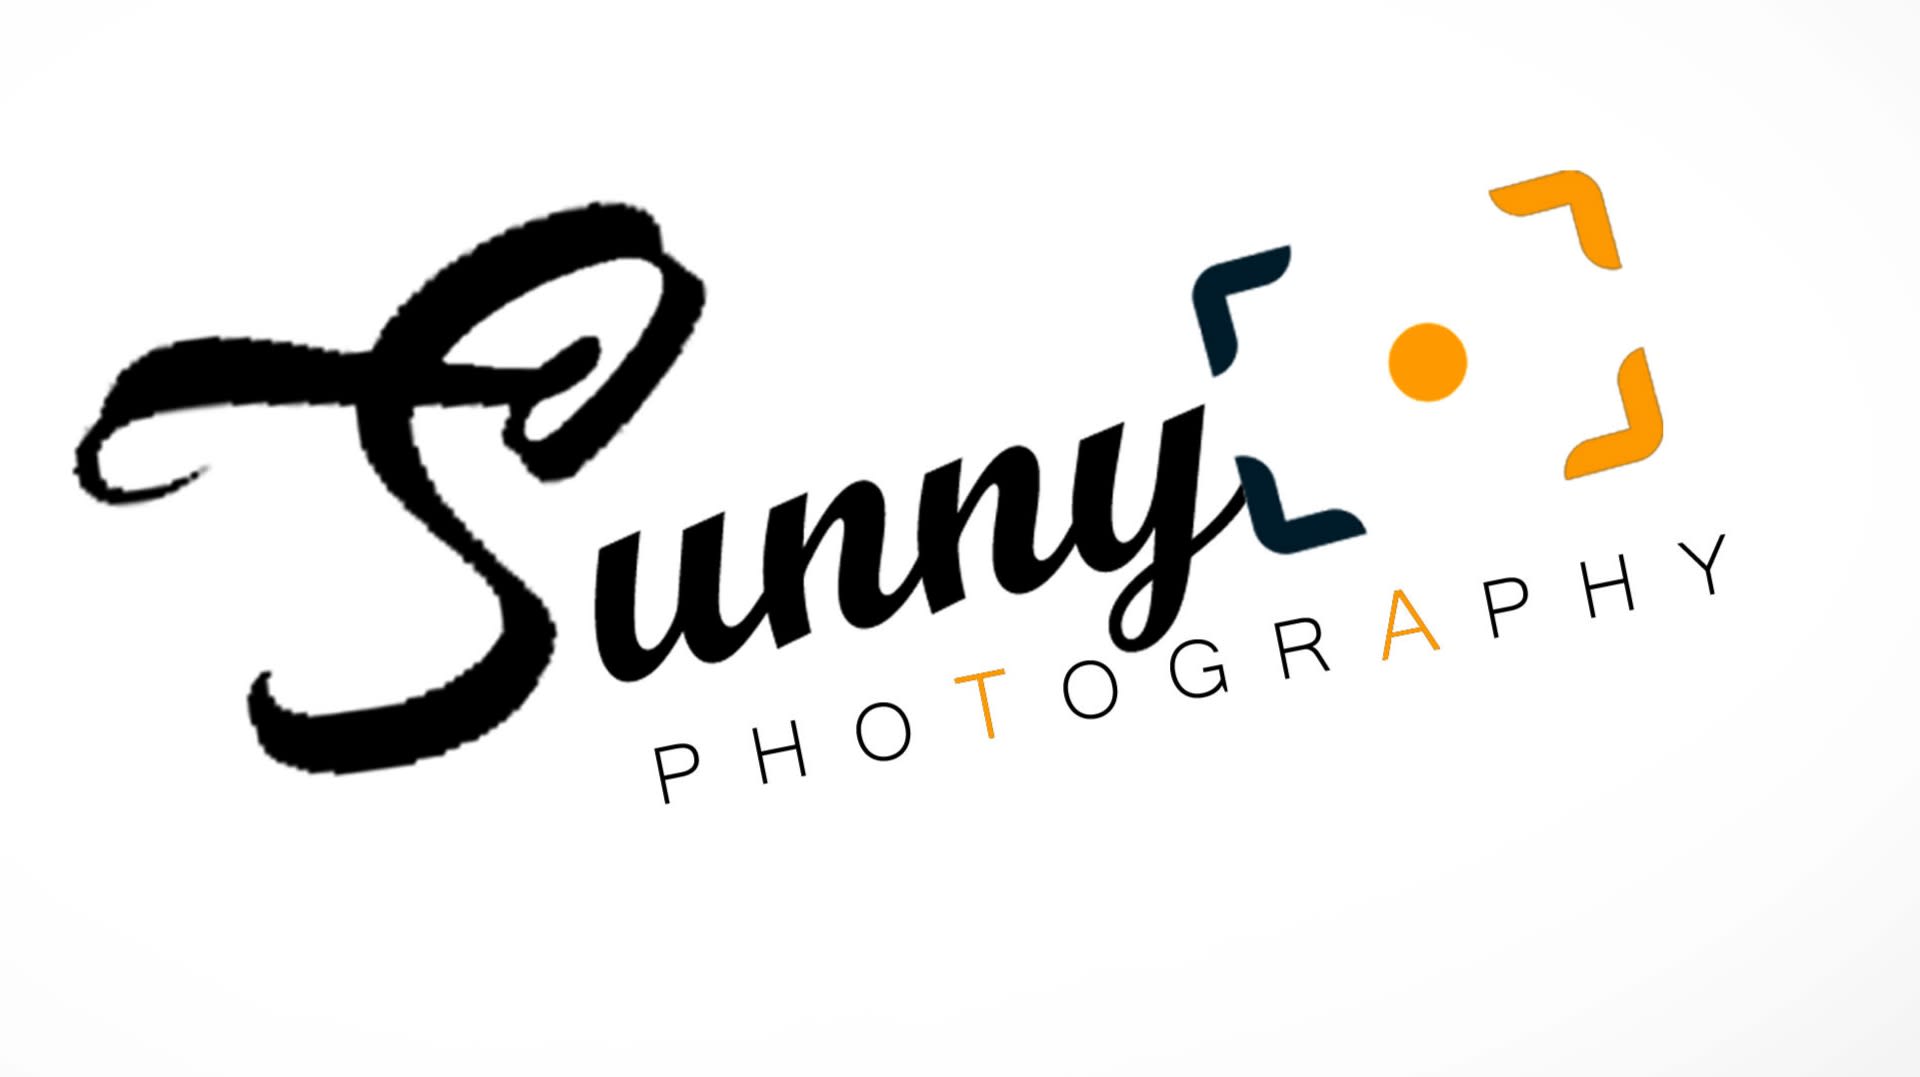 Sunny Photography